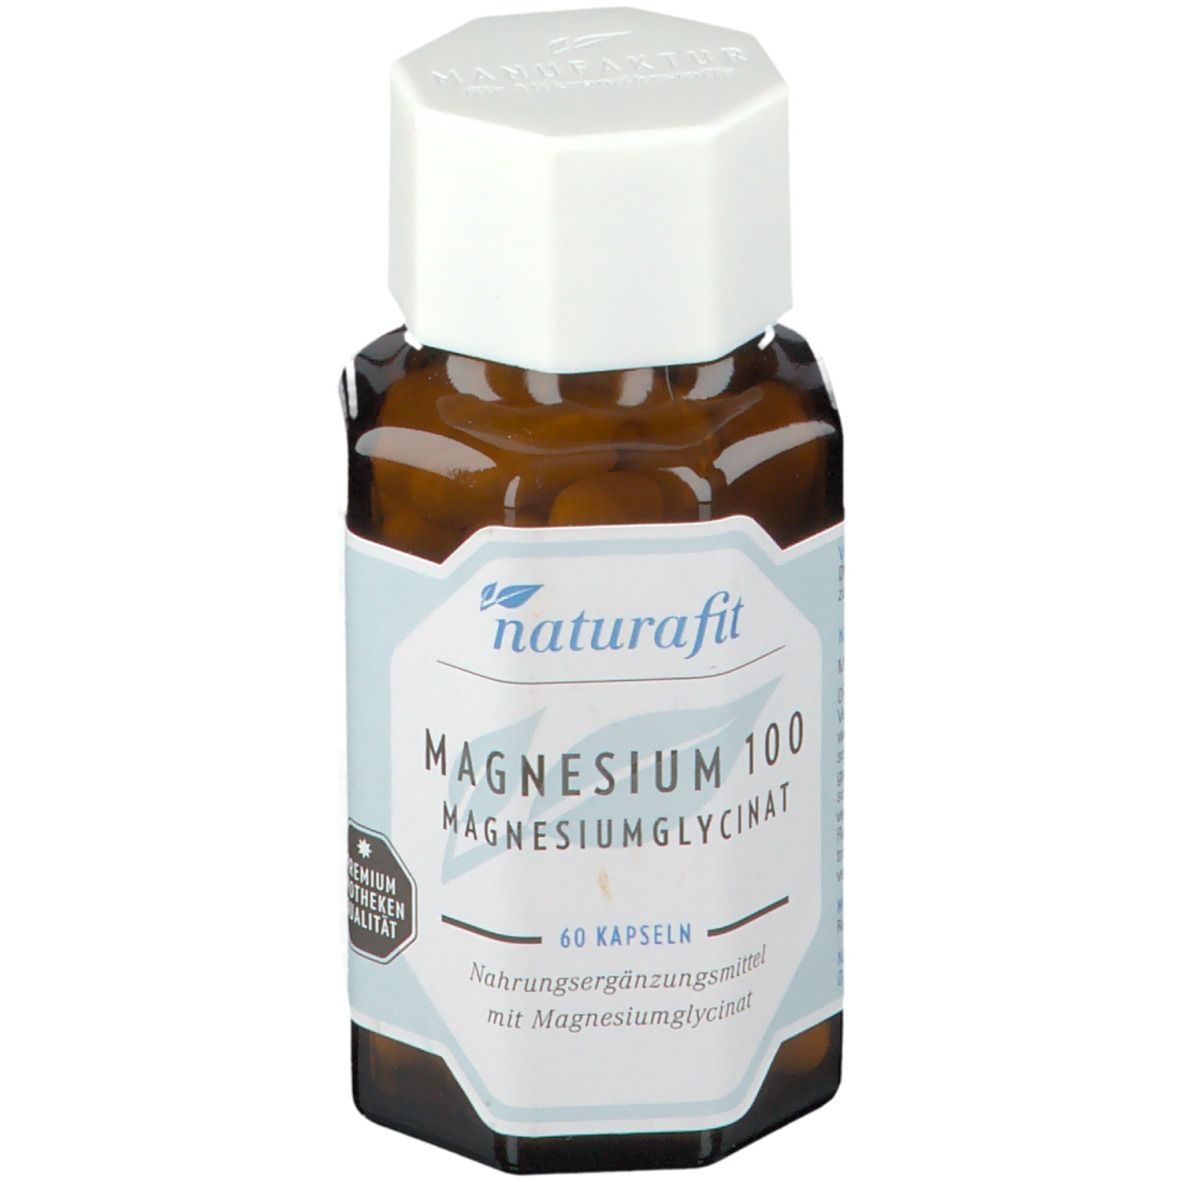 naturafit Magnesium100 mg Magnesiumglycinat